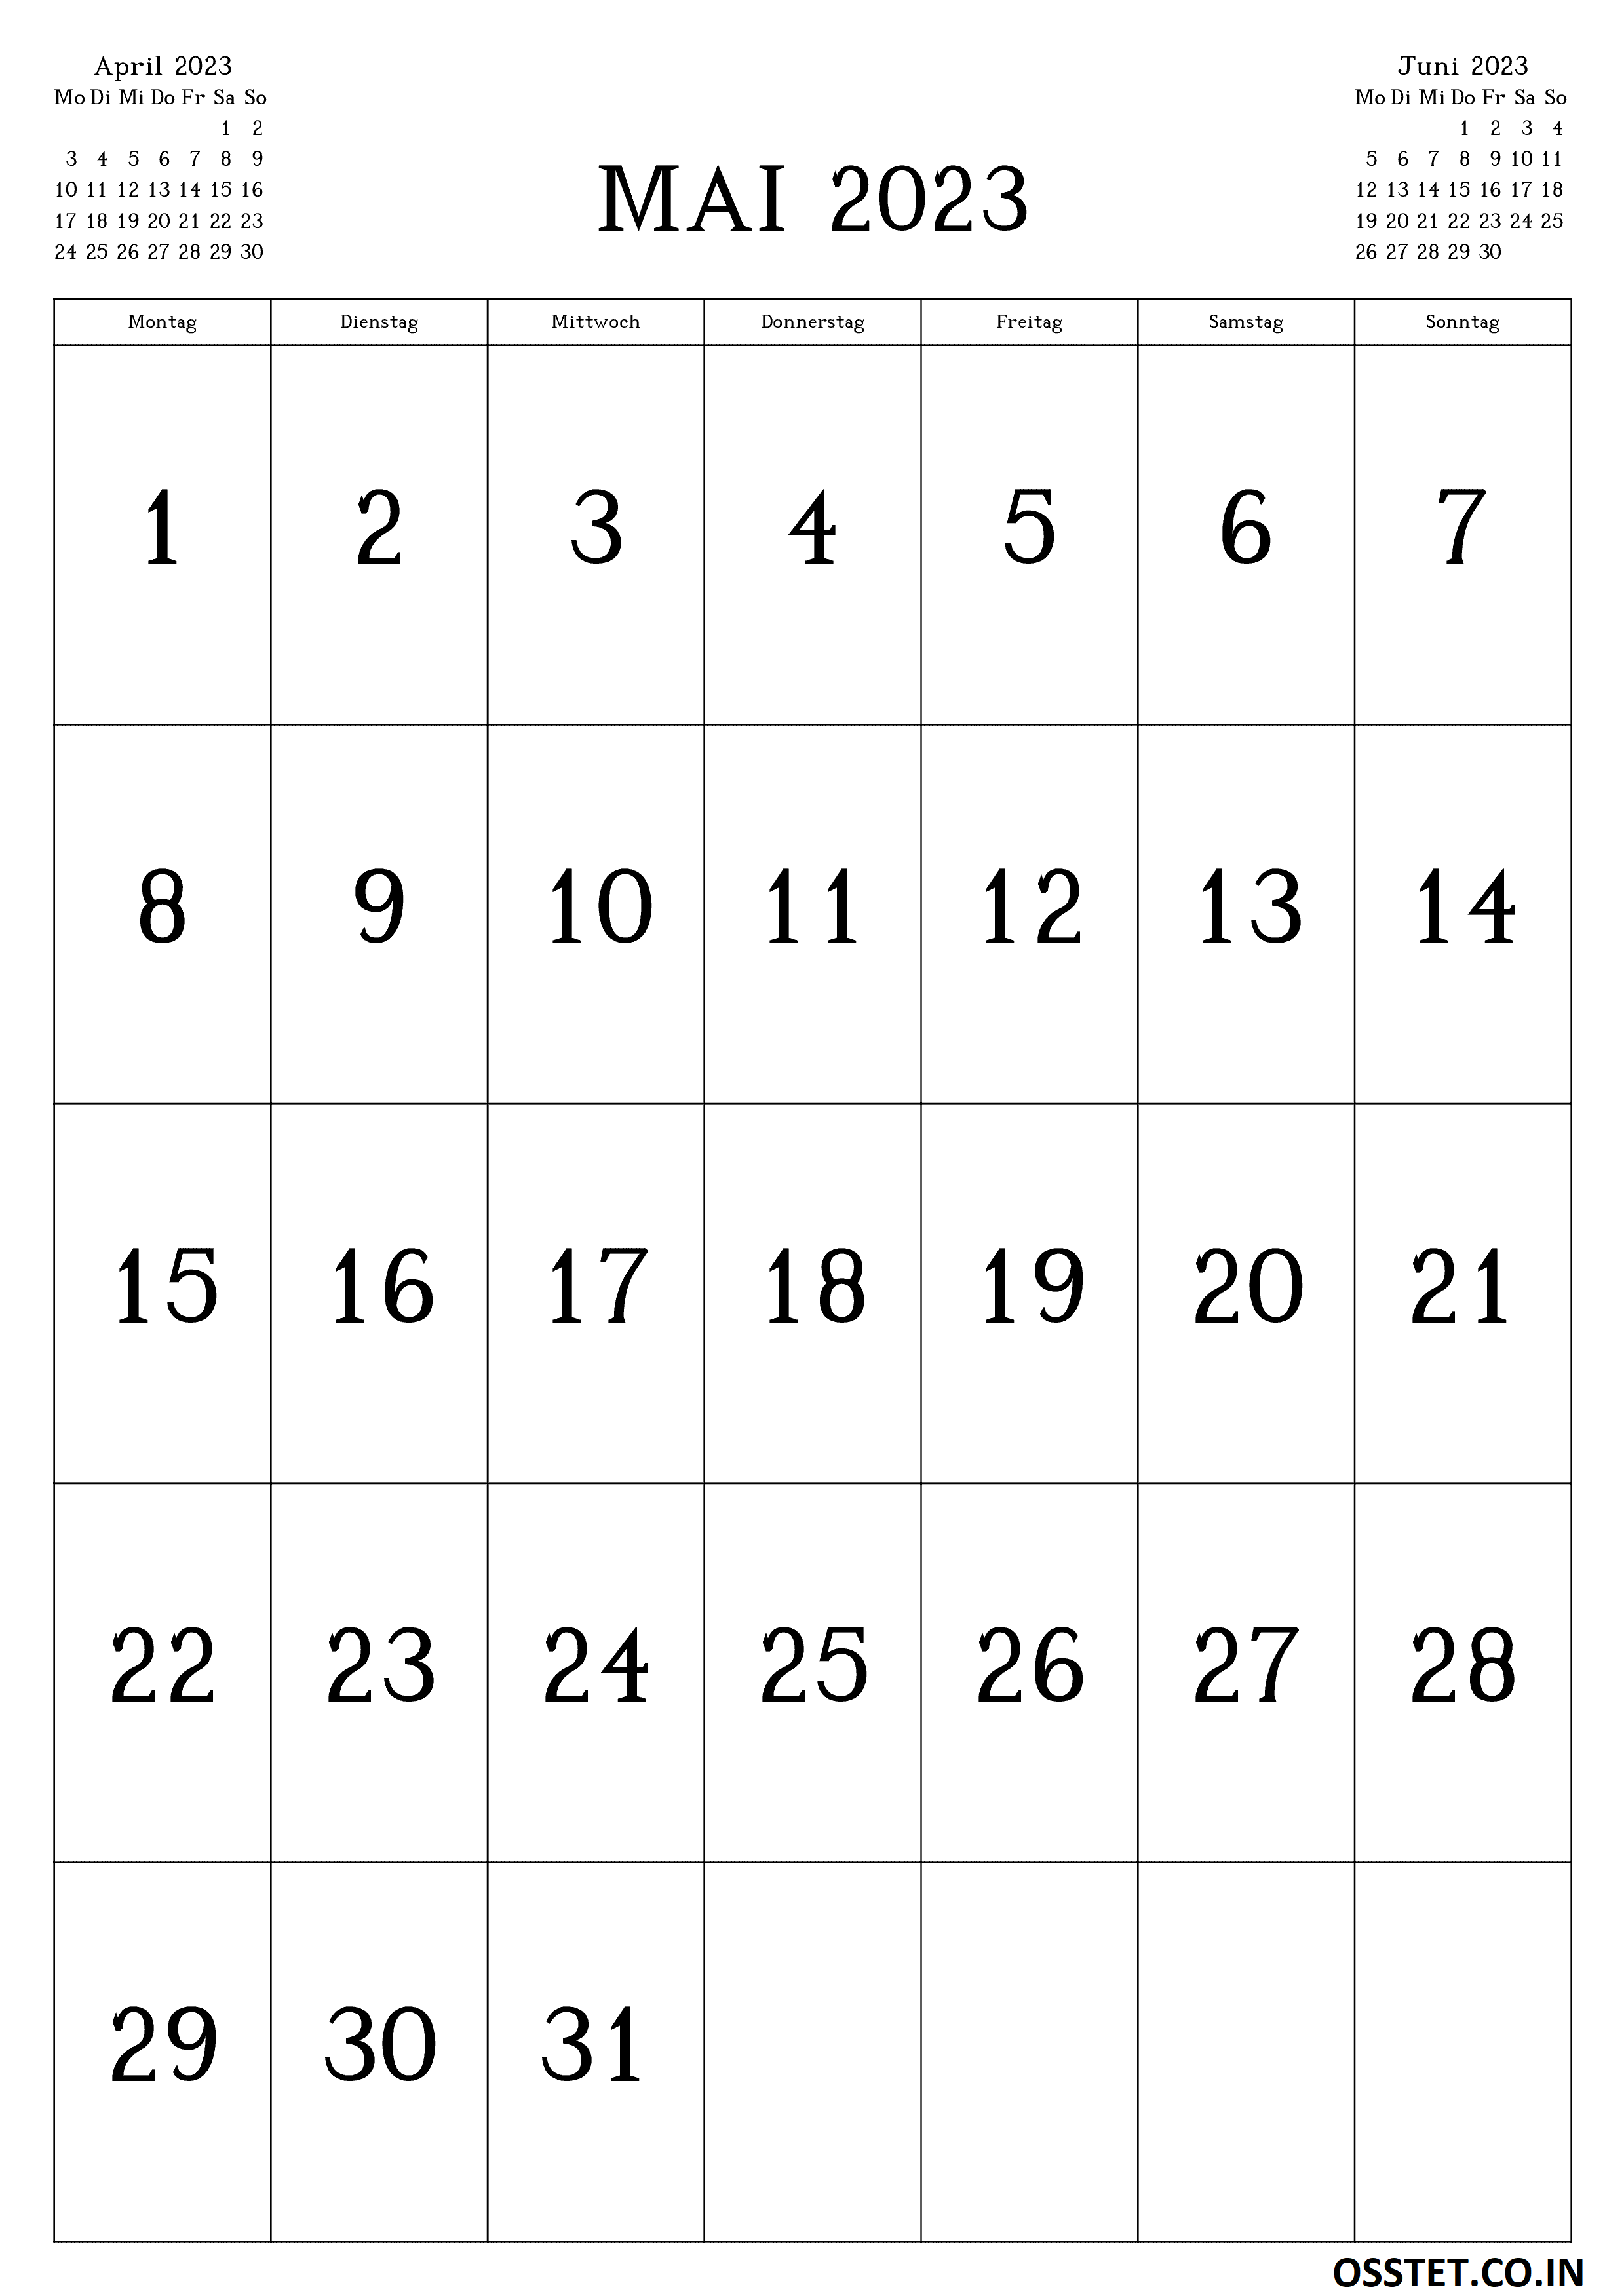 Mai 2023 Kalender vertikal